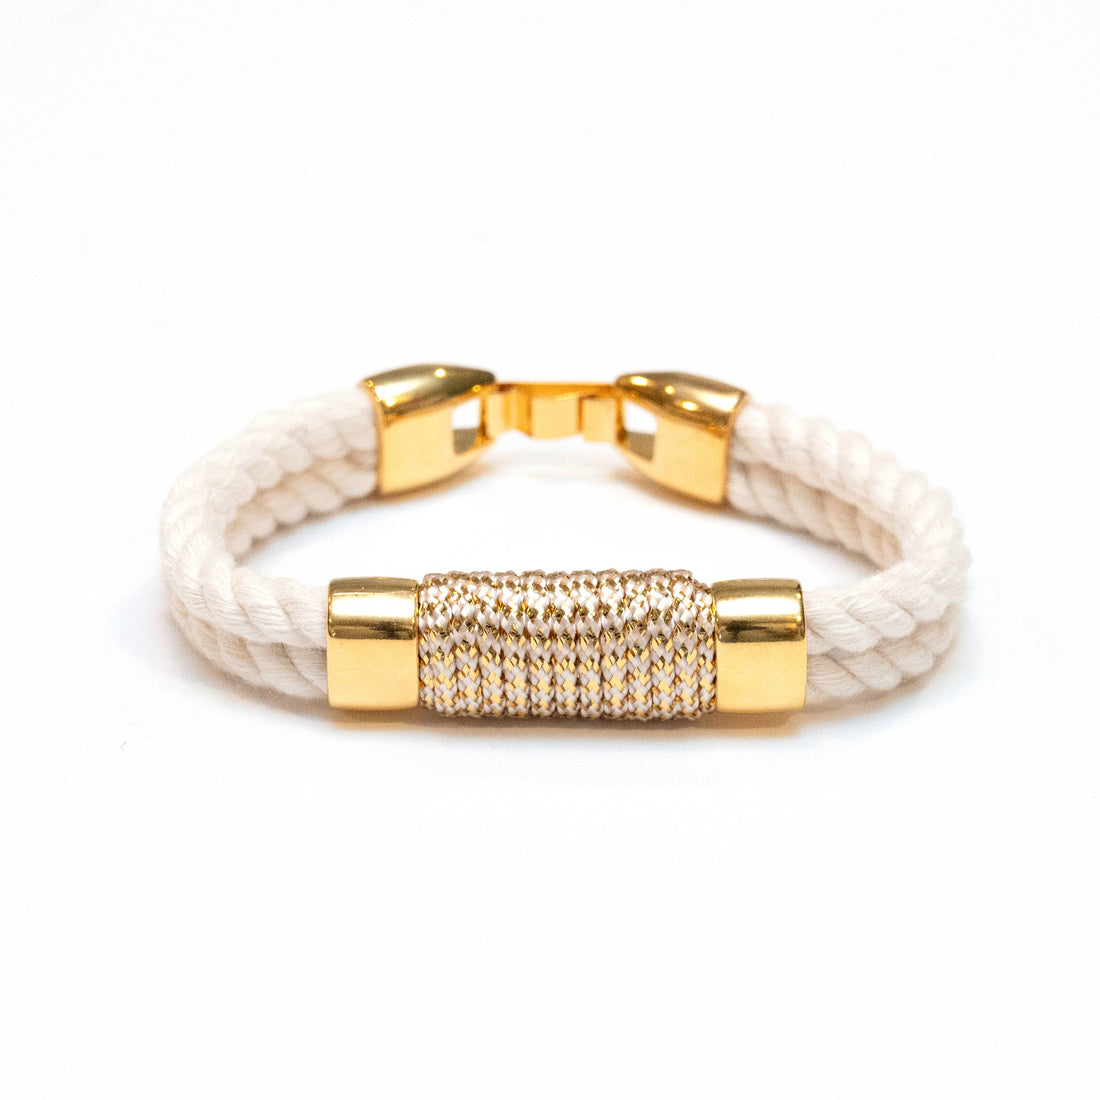 Tremont Bracelet - Ivory/Metallic Gold: S